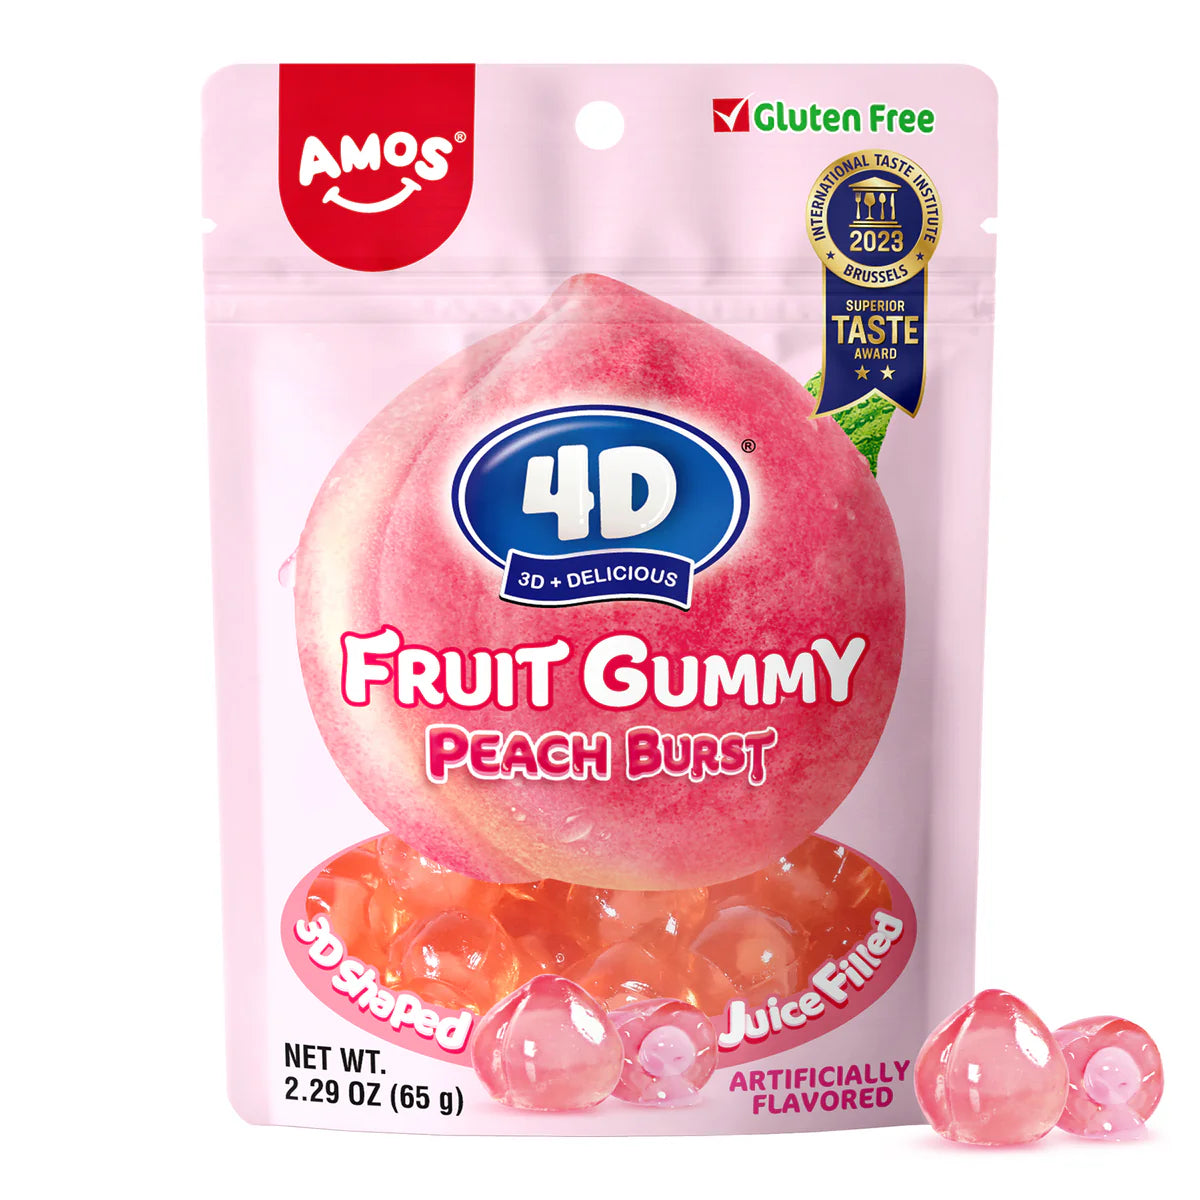 4D Fruit Gummy Peach Burst